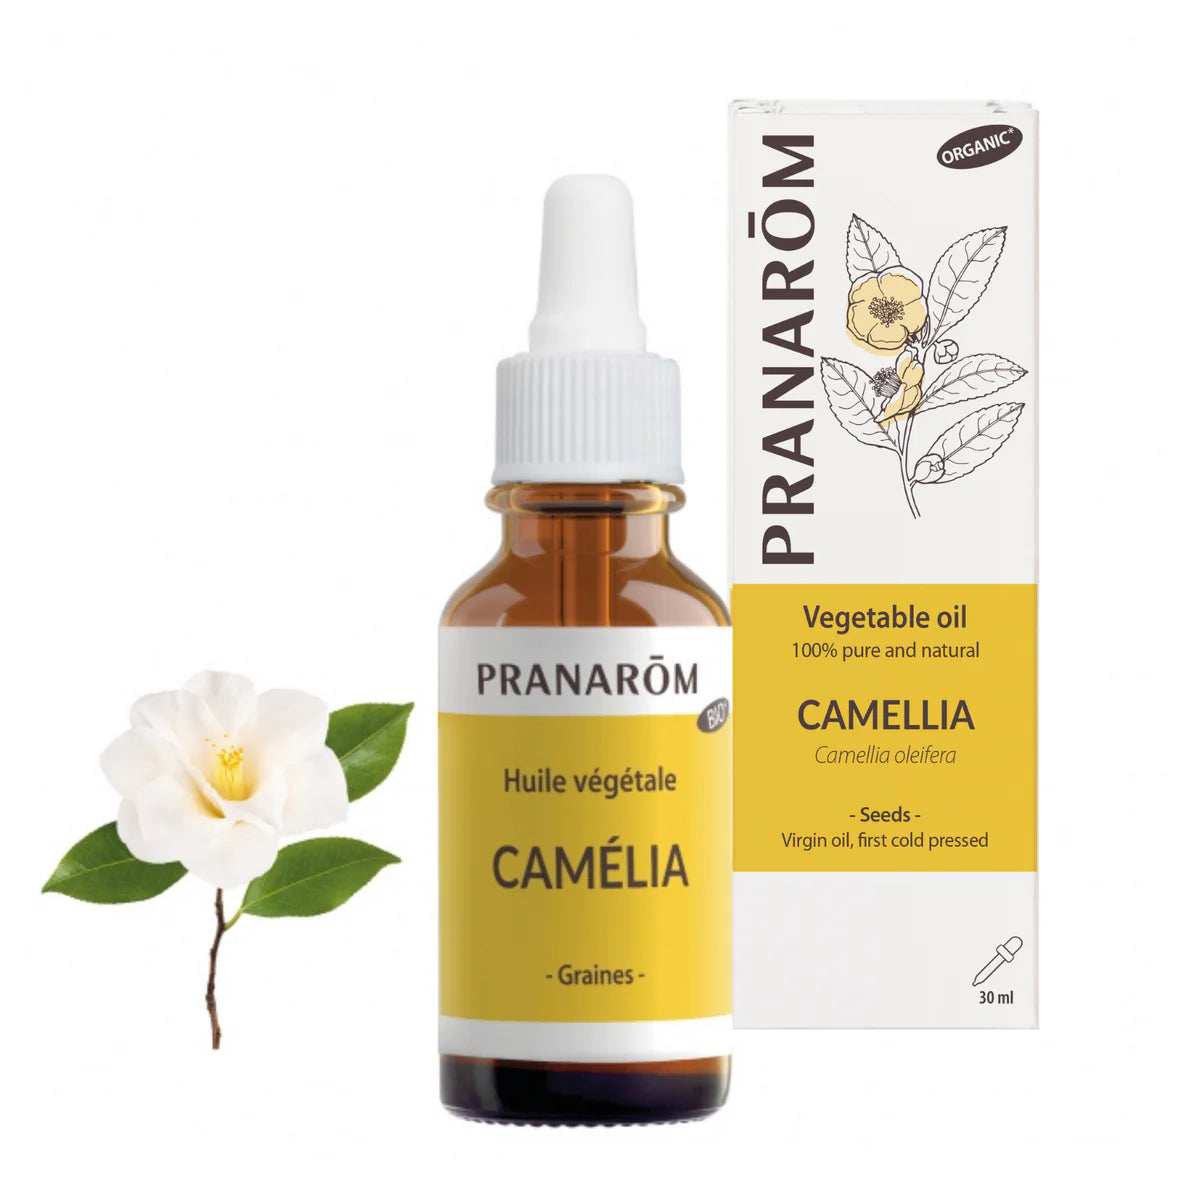 Camellia Precious Oil 100% Natural Vegetable Oil – Organic 50 ml